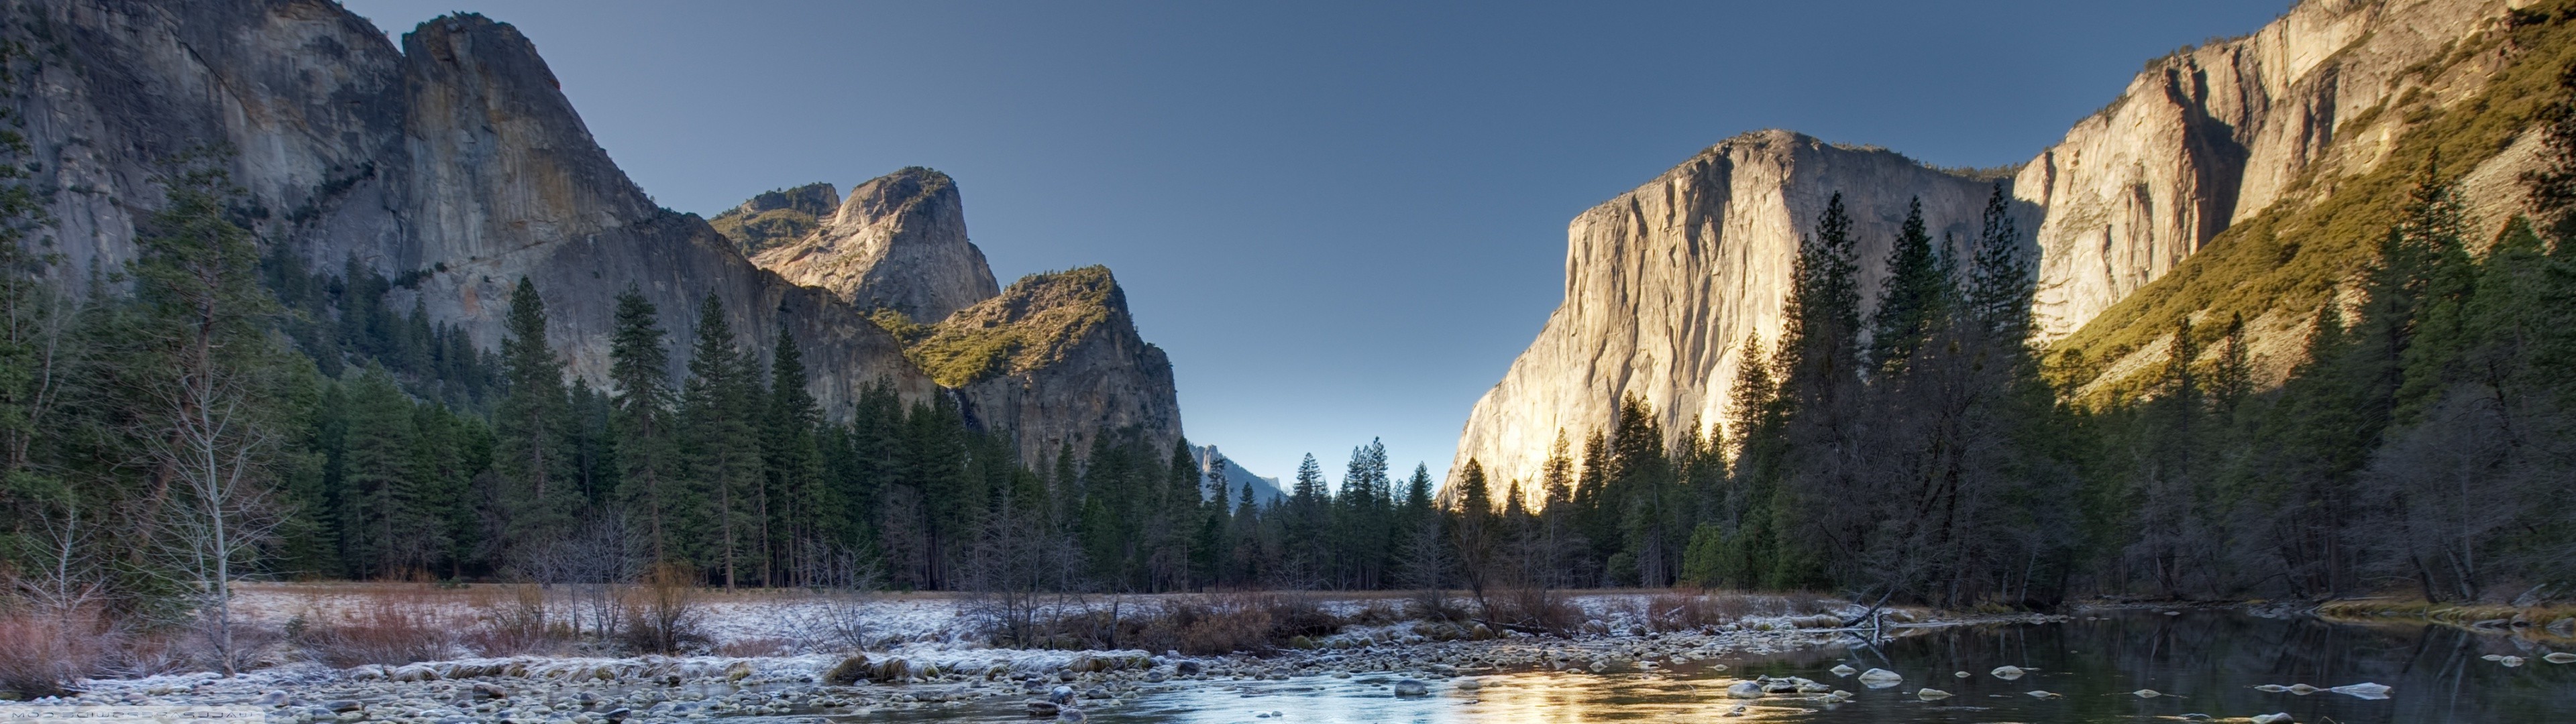 Multiple Display Landscape Yosemite National Park Wallpaper And